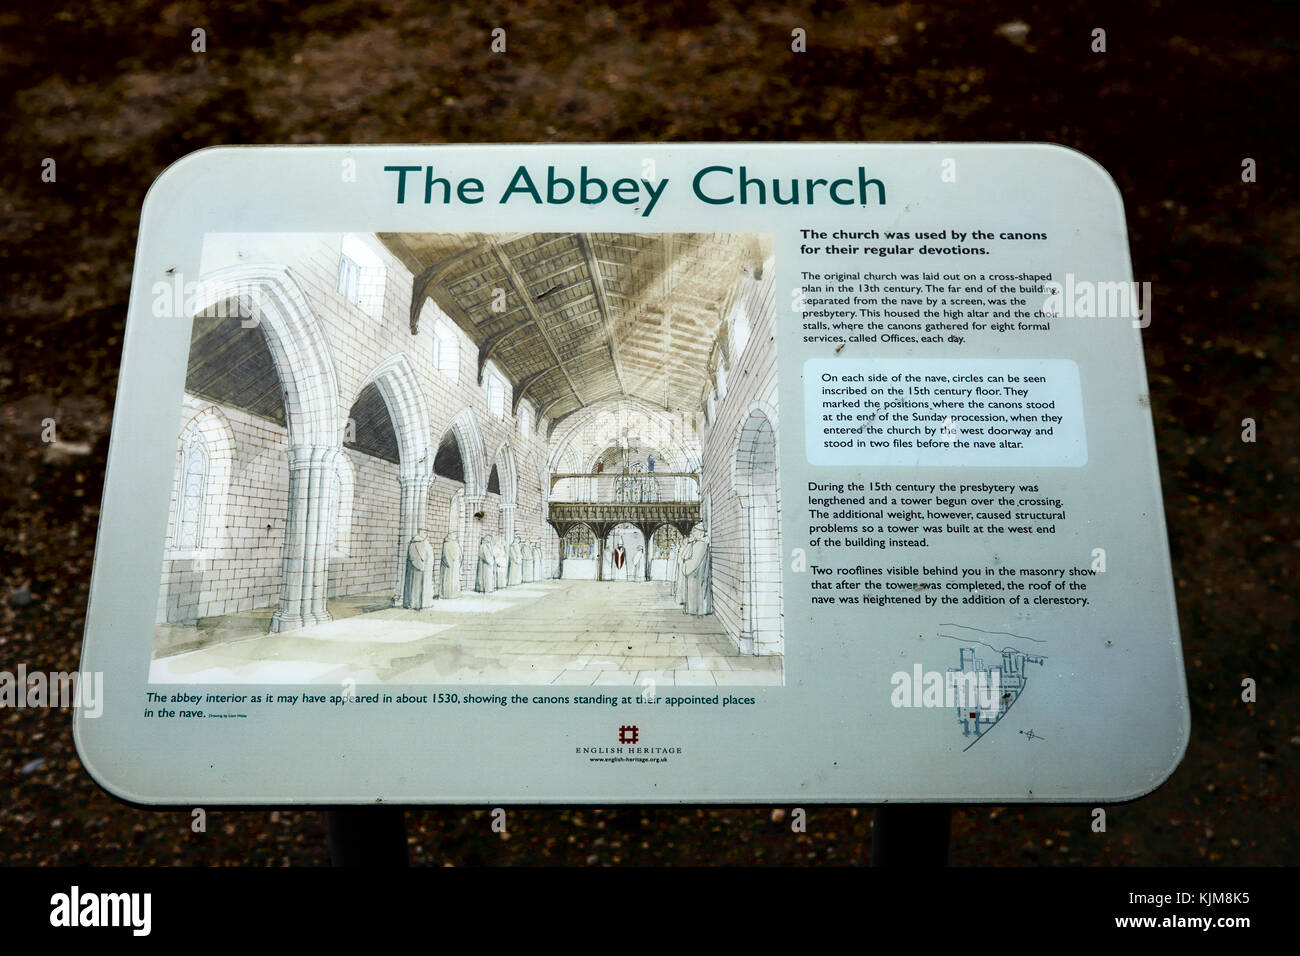 English Heritage information panels at Shap Abbey, Shap, Cumbria Stock Photo